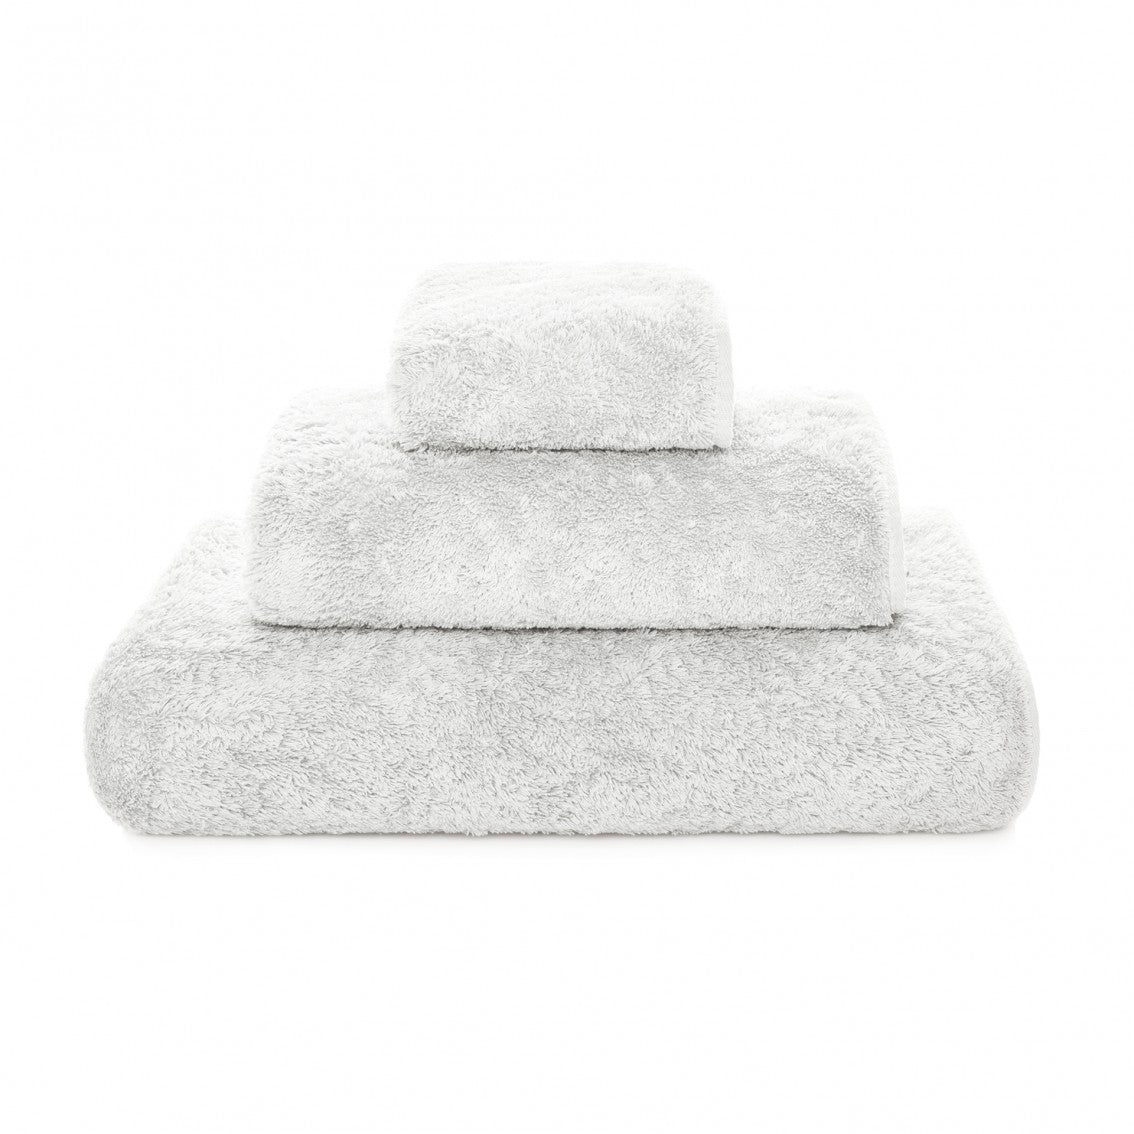 Graccioza Egoist Cloud Bath Sheet at Luxurious Beds and Linens